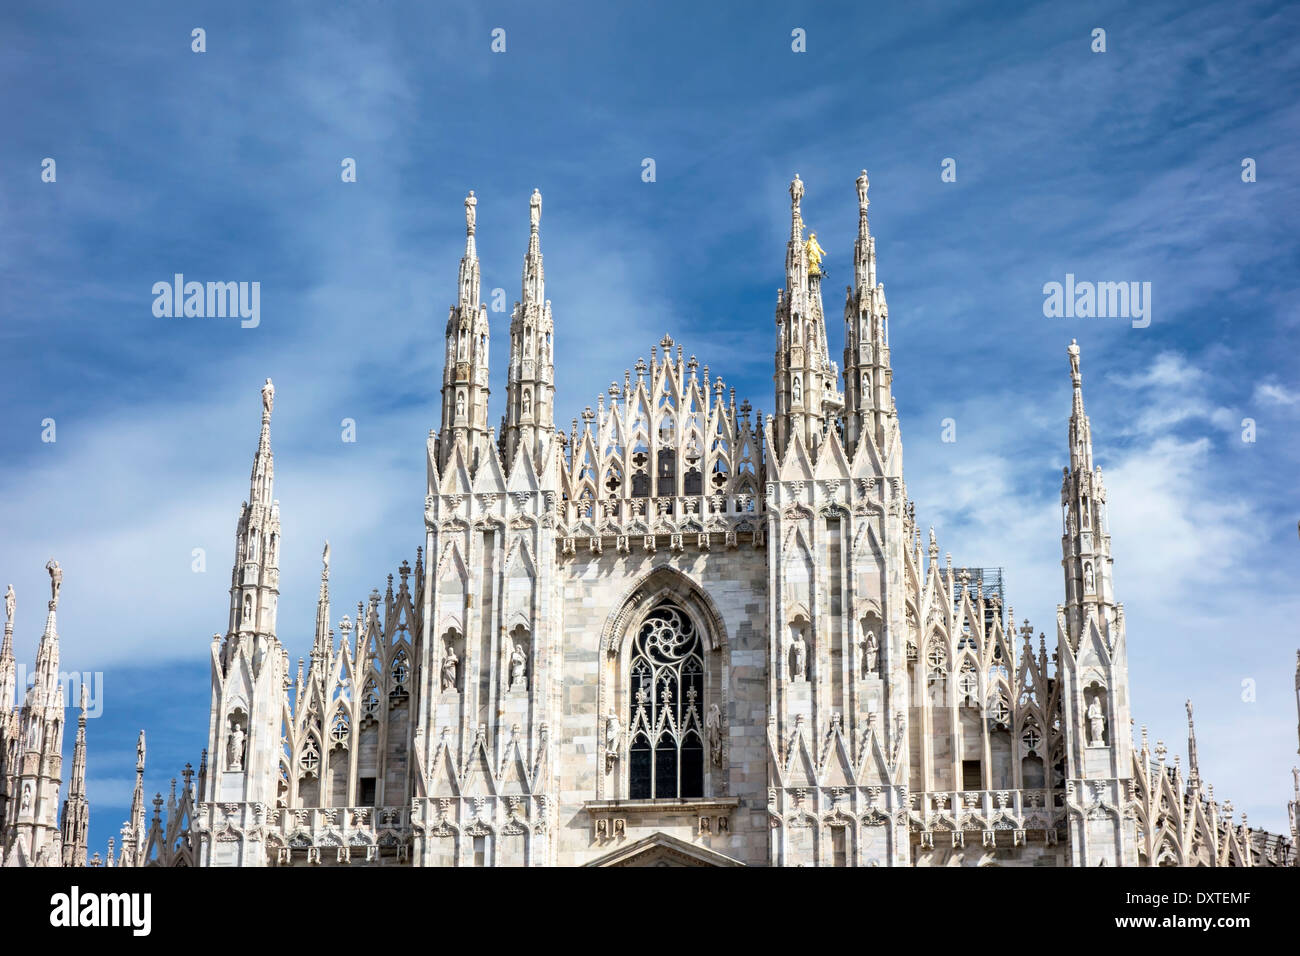 Facade of Cathedral Duomo in Milan, Italy Stock Photo